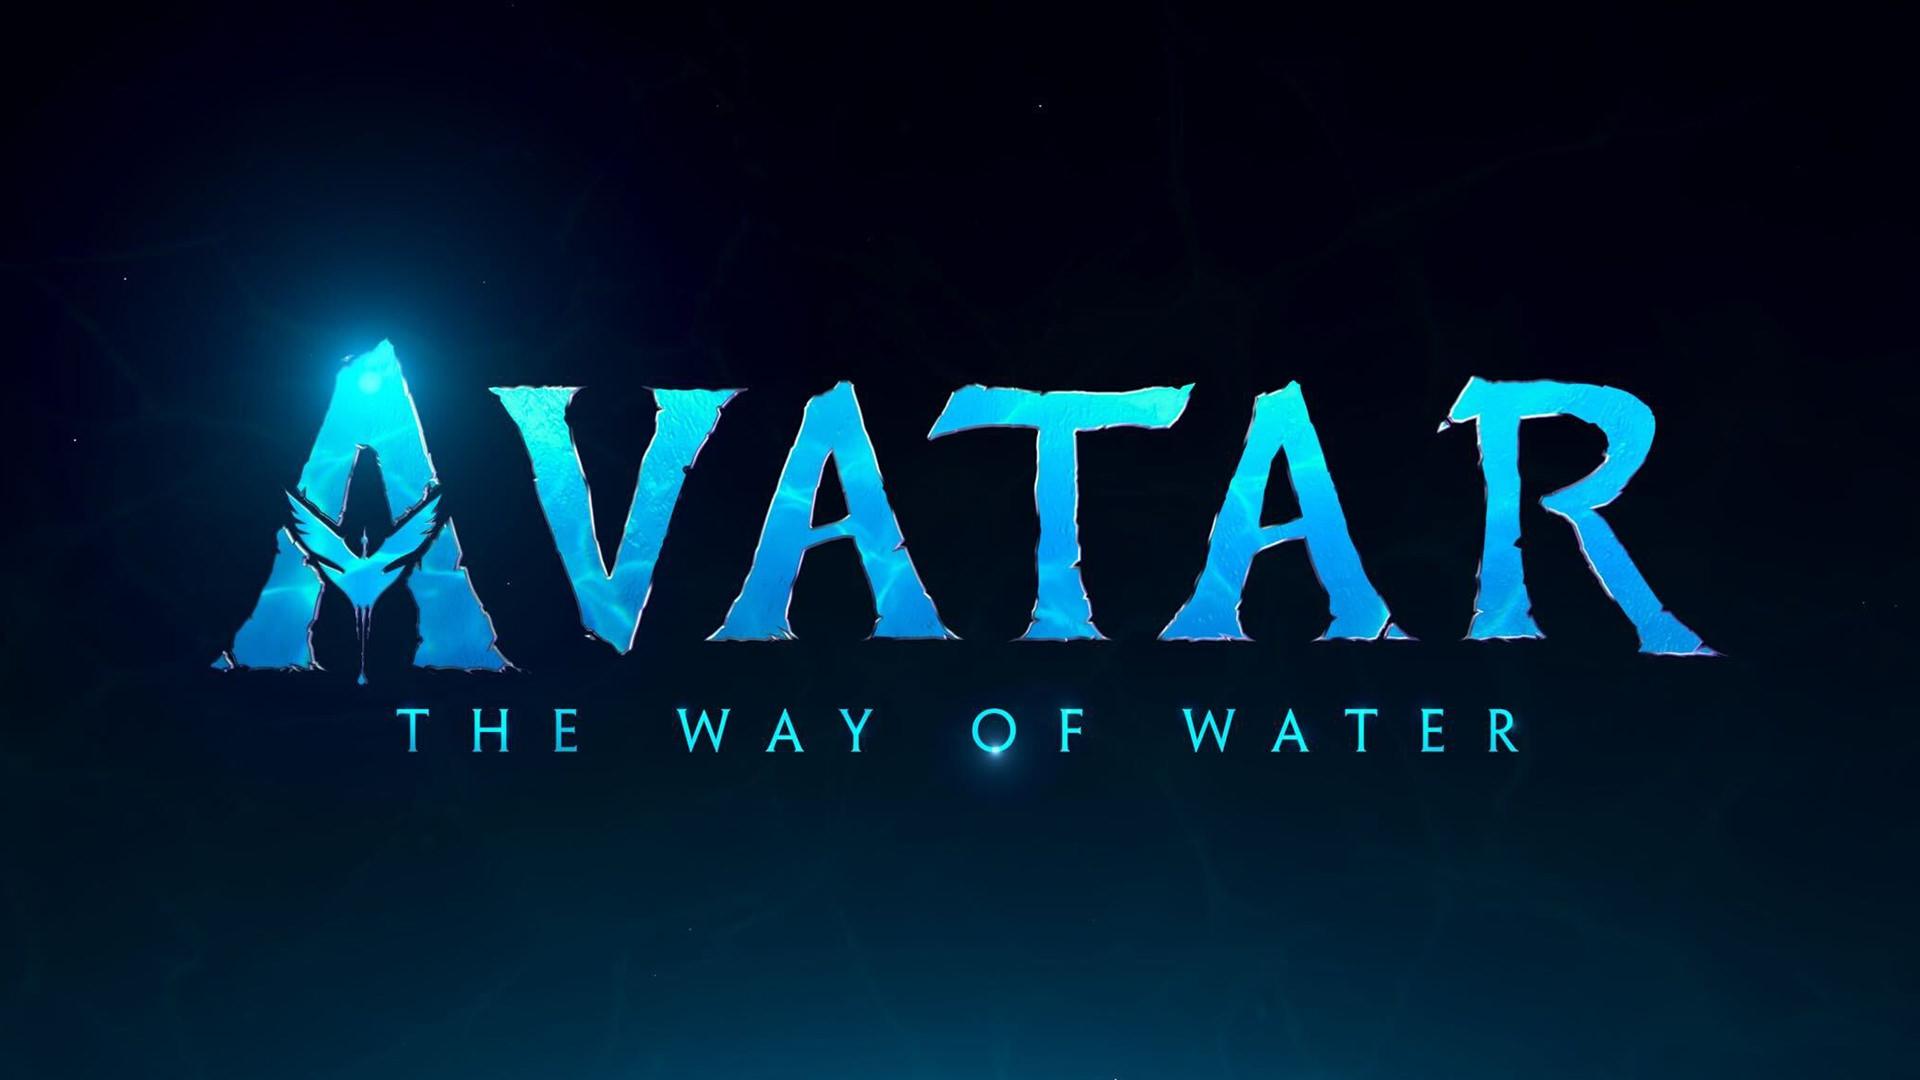 فاش شدن اولین تصاویر فیلم Avatar 2 